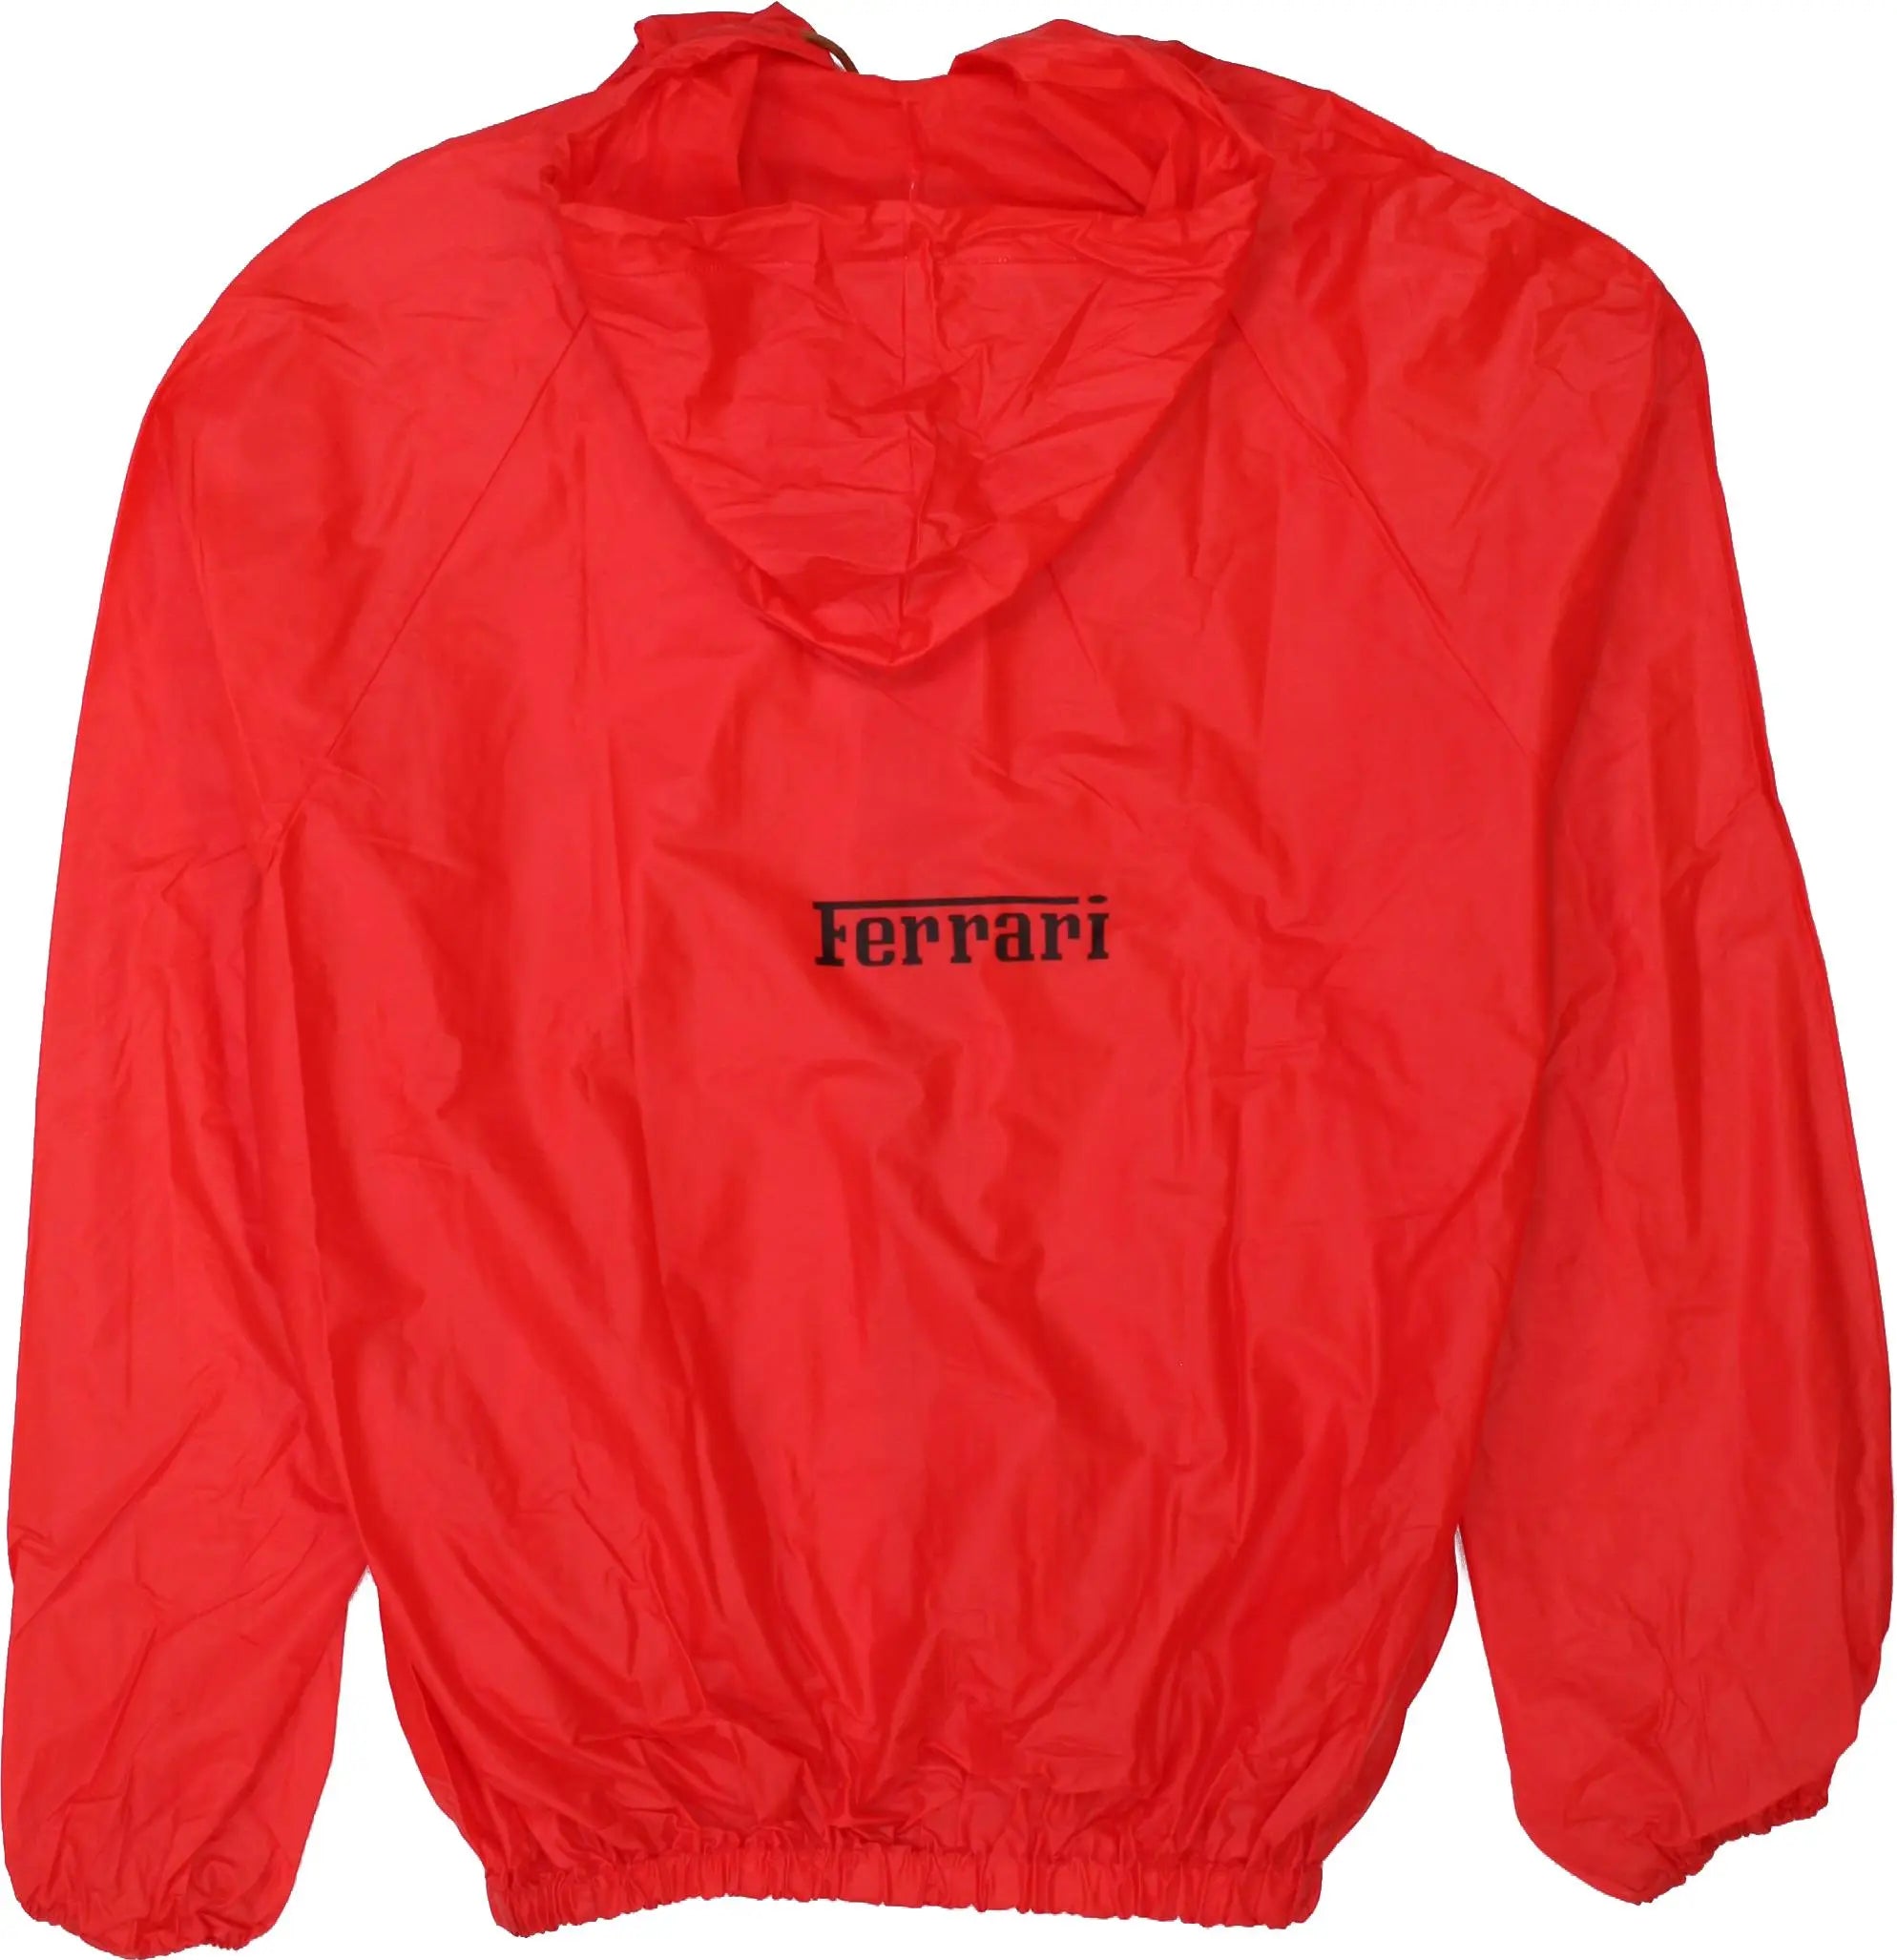 Ferrari - 90s Ferrari Hooded Raincoat- ThriftTale.com - Vintage and second handclothing